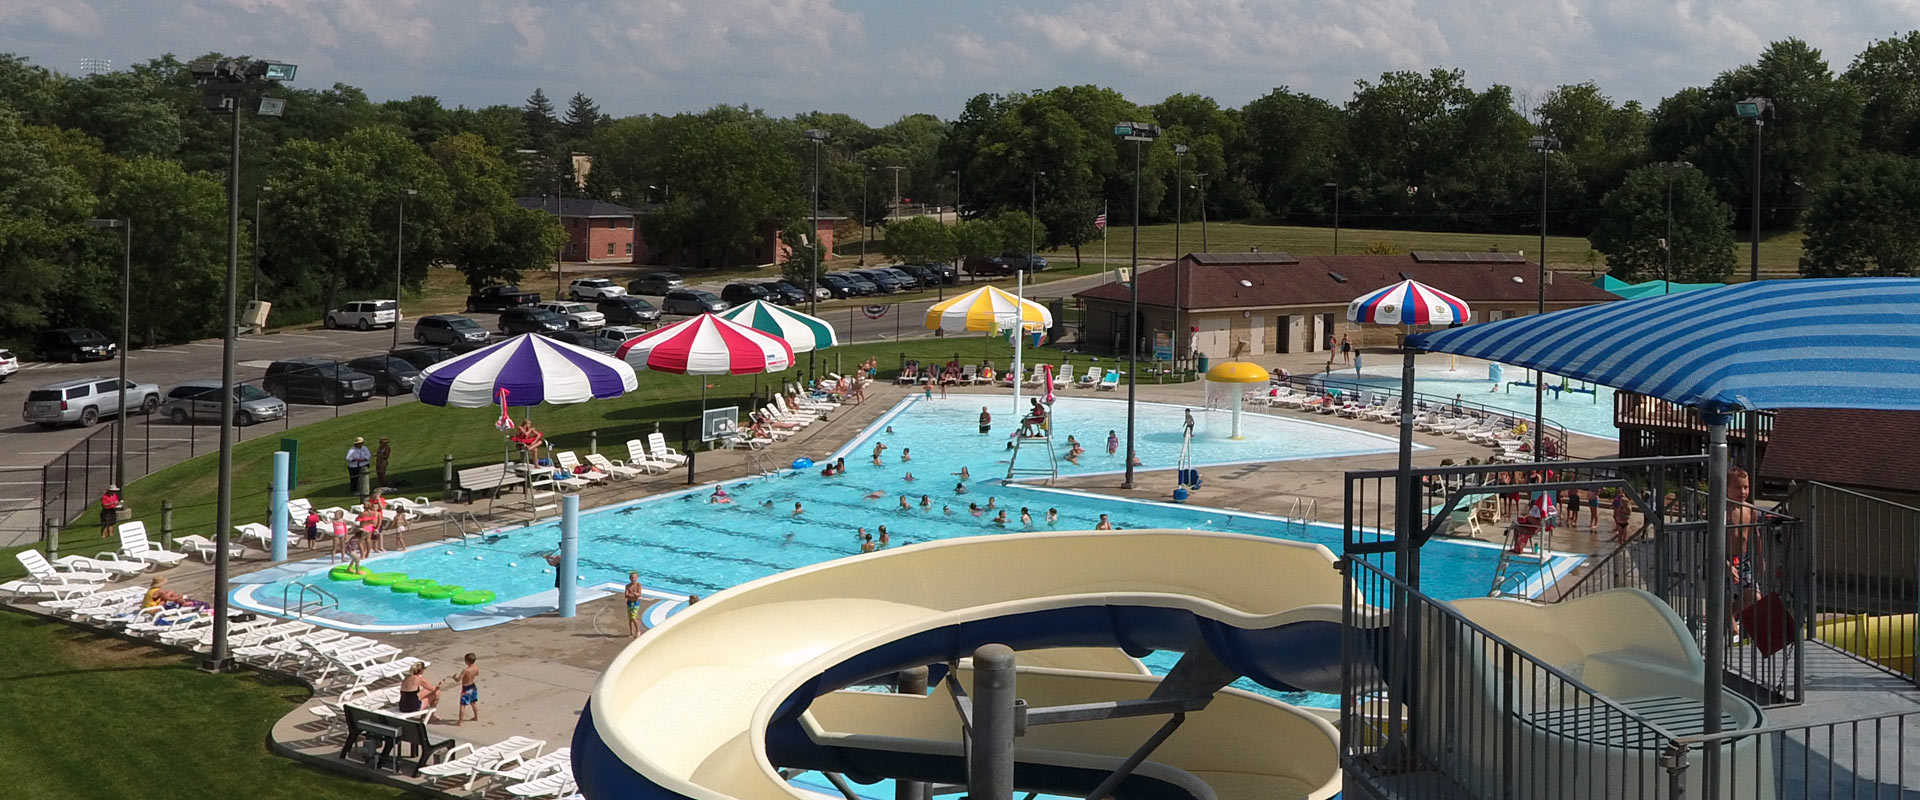 Public Outdoor Pool in Indianola, Iowa